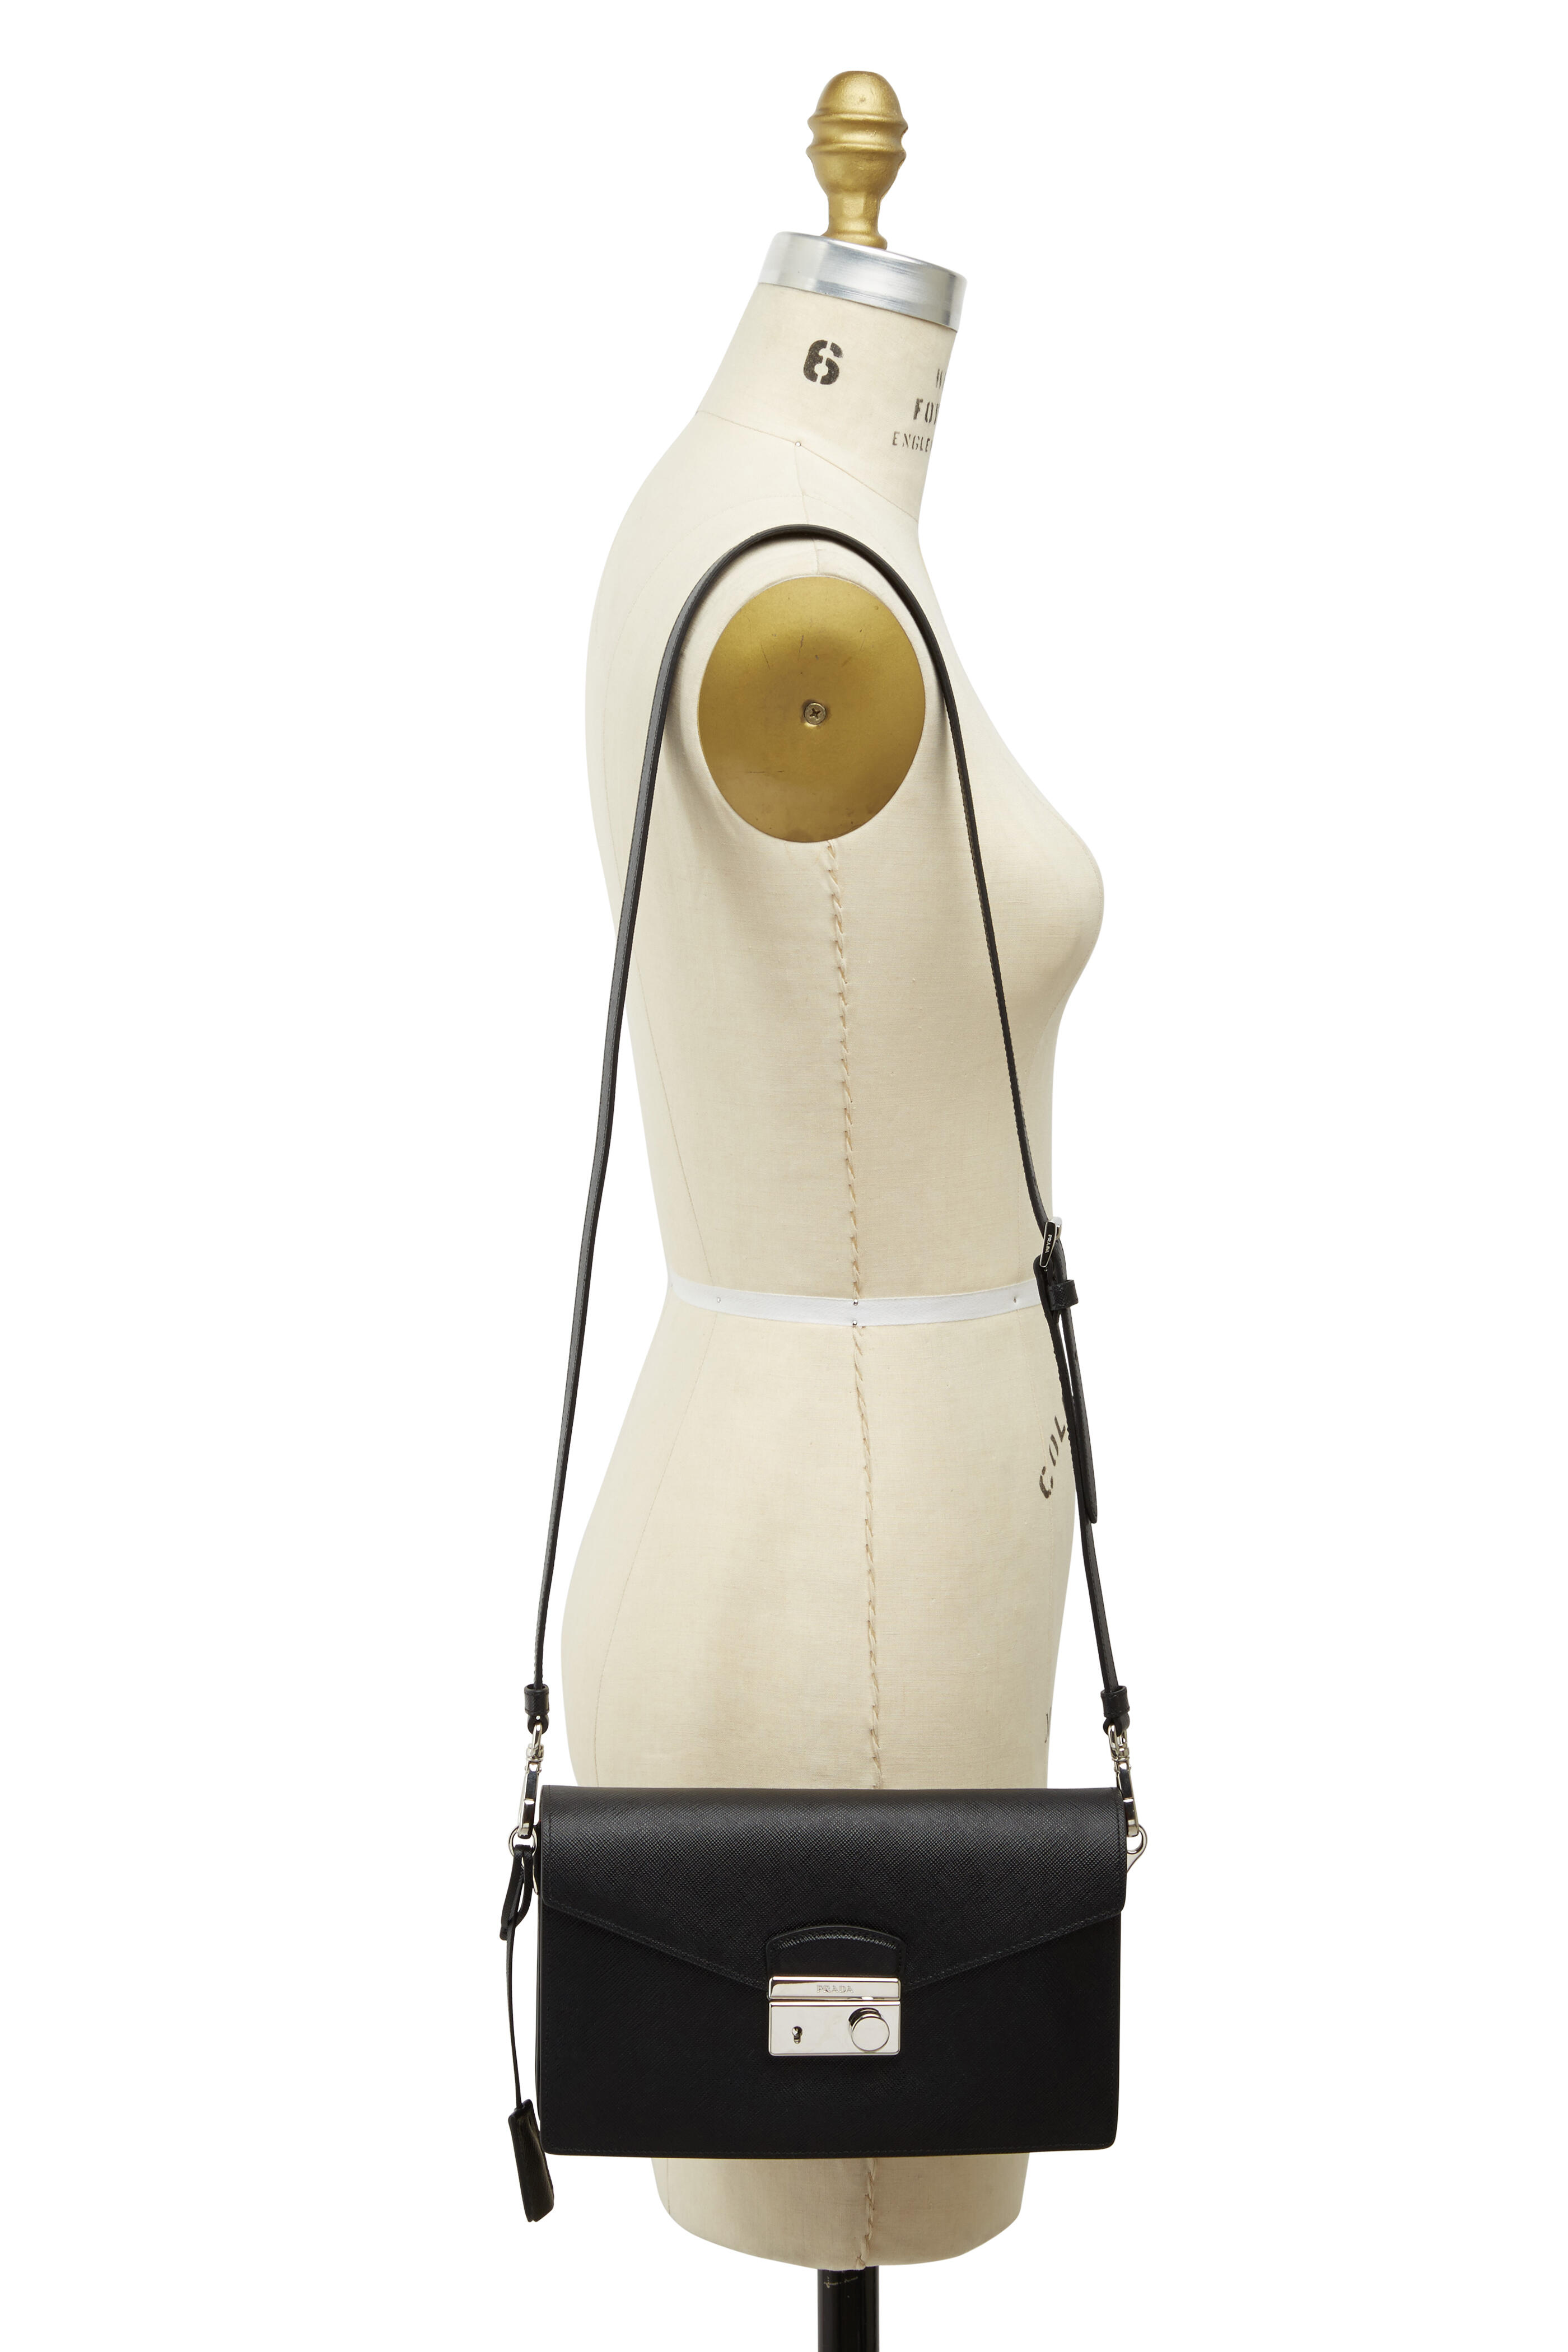 Prada Saffiano Lux Crossbody Bags